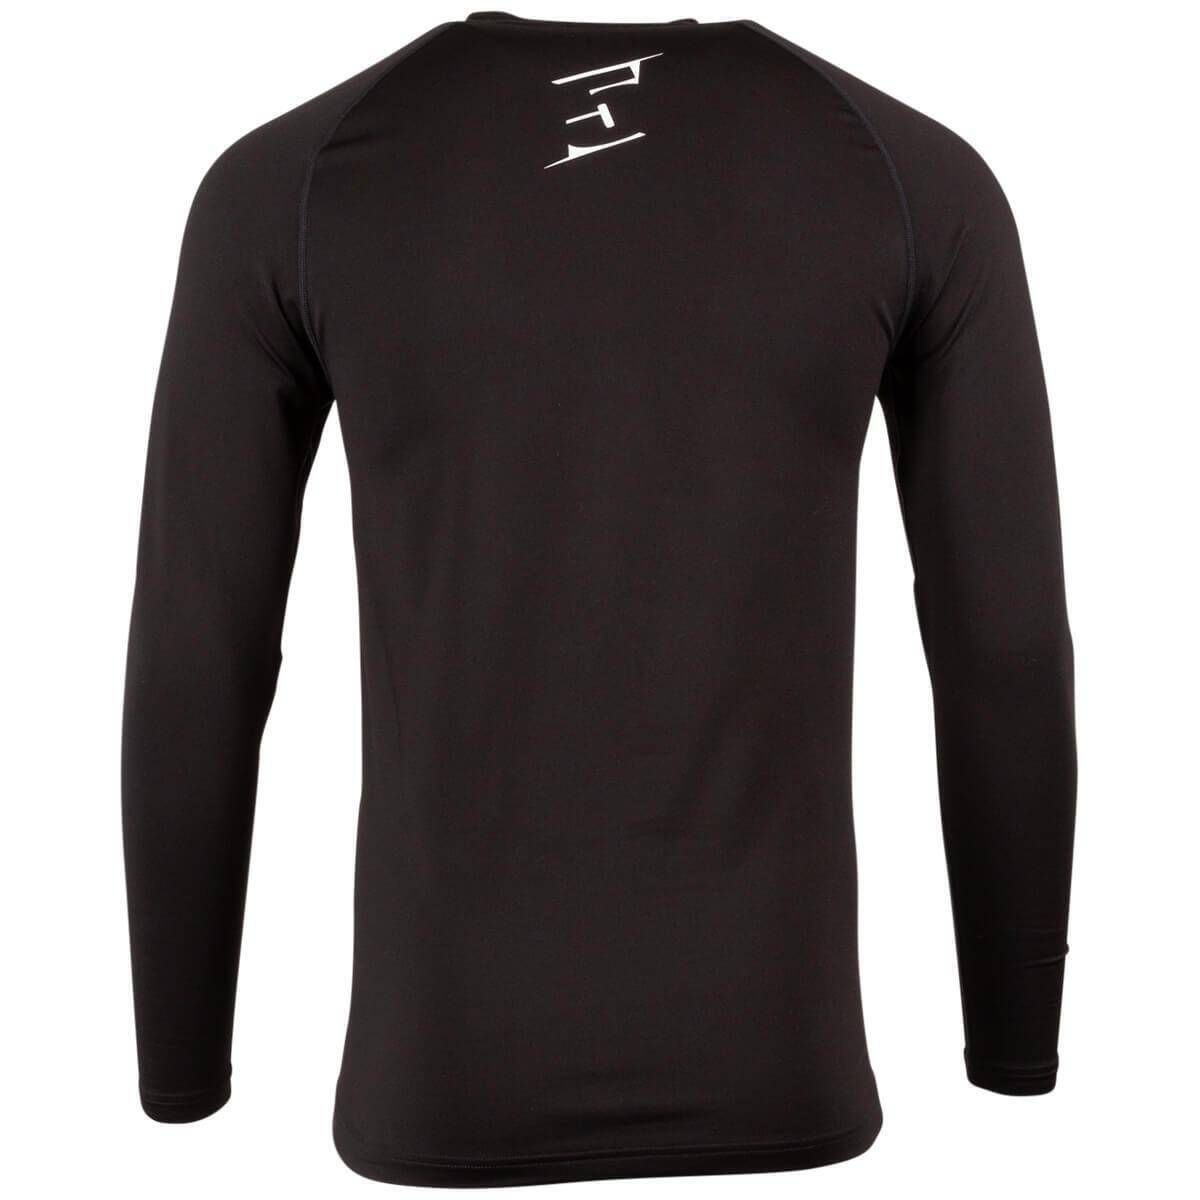 509 FZN LVL 1 Shirt-Black Sm